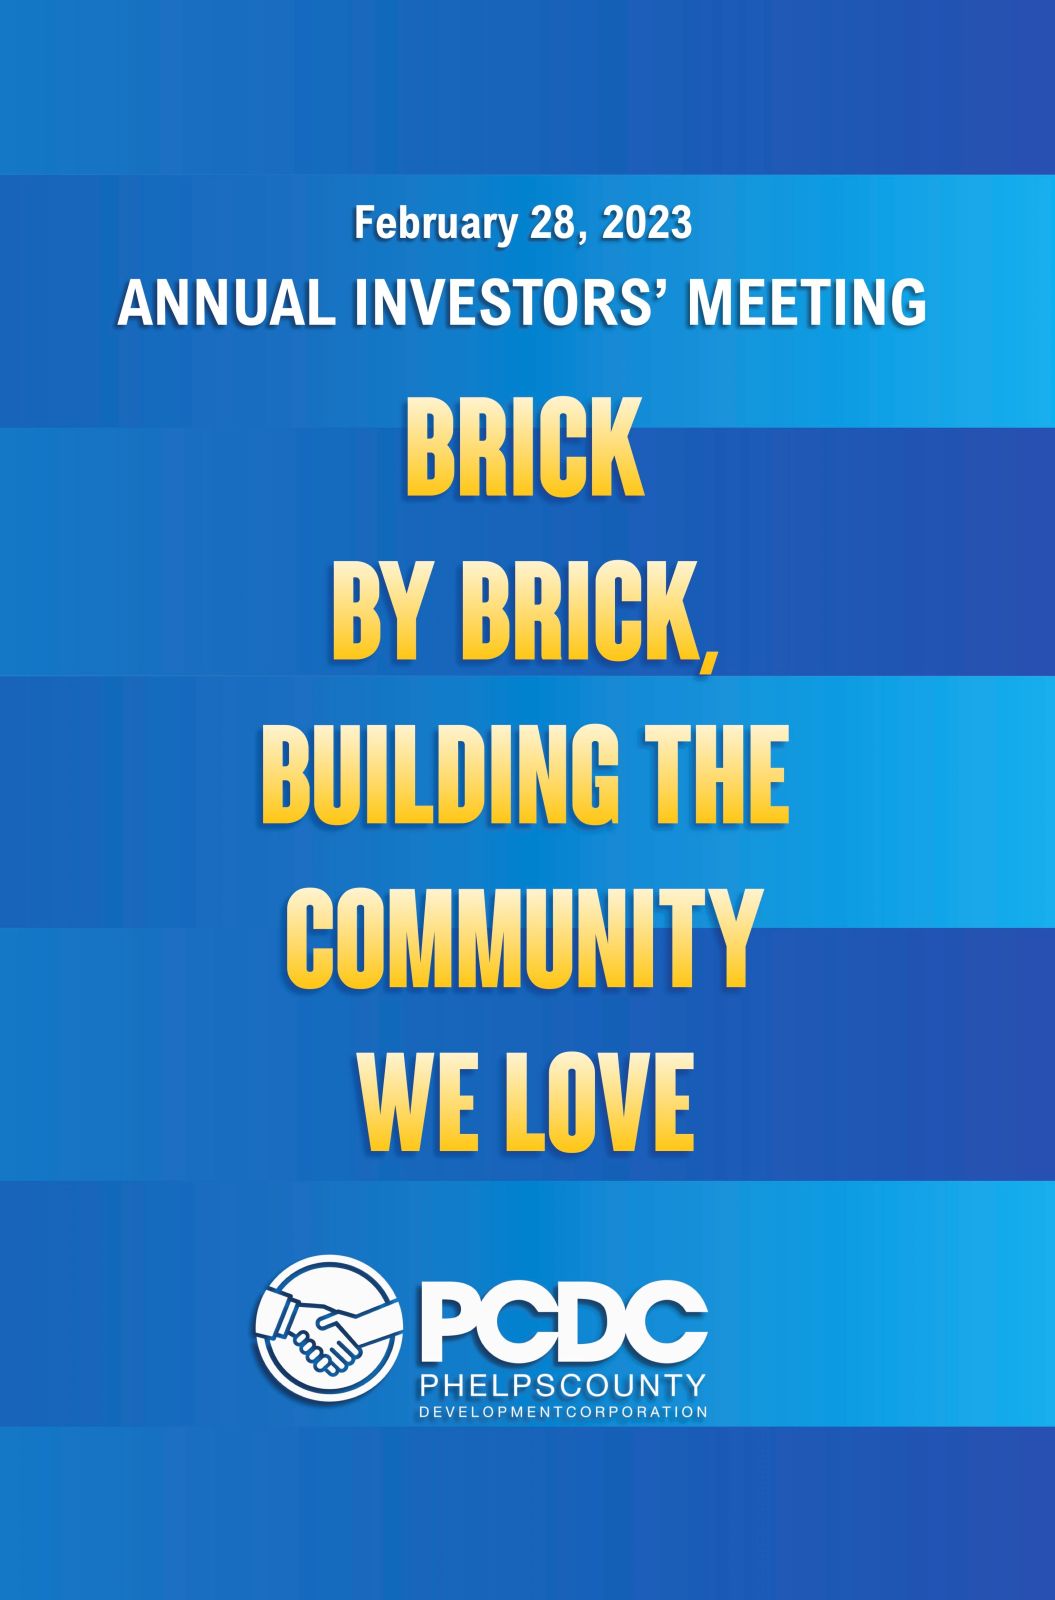 Feb. 28 Annual Meeting Will Celebrate Wins, Brick by Brick Photo